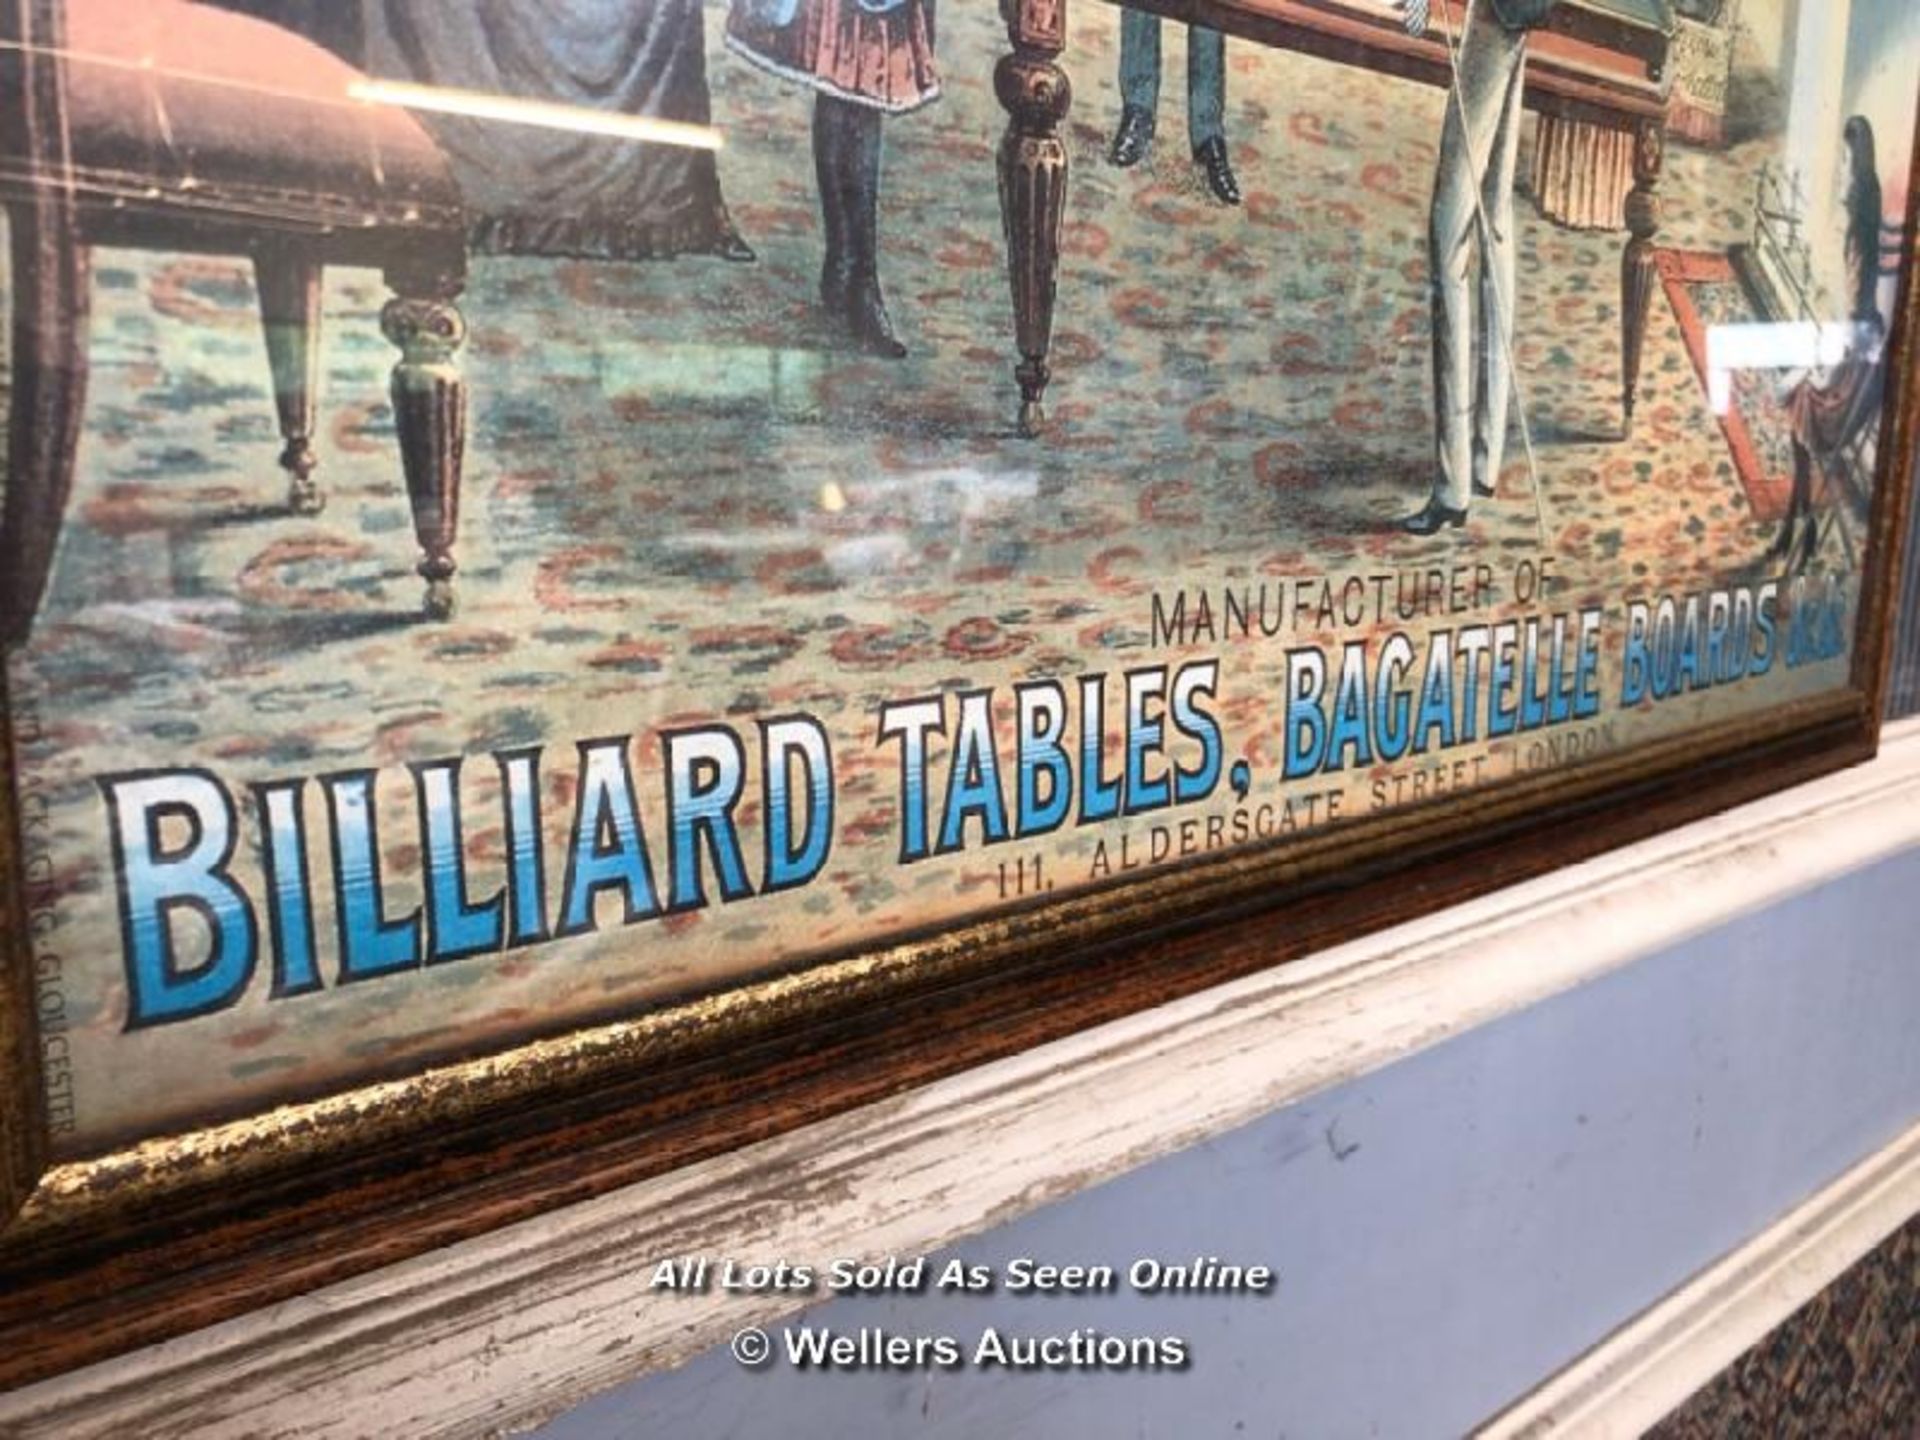 F.H. AYRES BILLIARD SCENE IN FRAME, MANUFACTURER OF BILLIARD TABLES, BAGATELLE BOARDS, APPROX. - Image 2 of 4